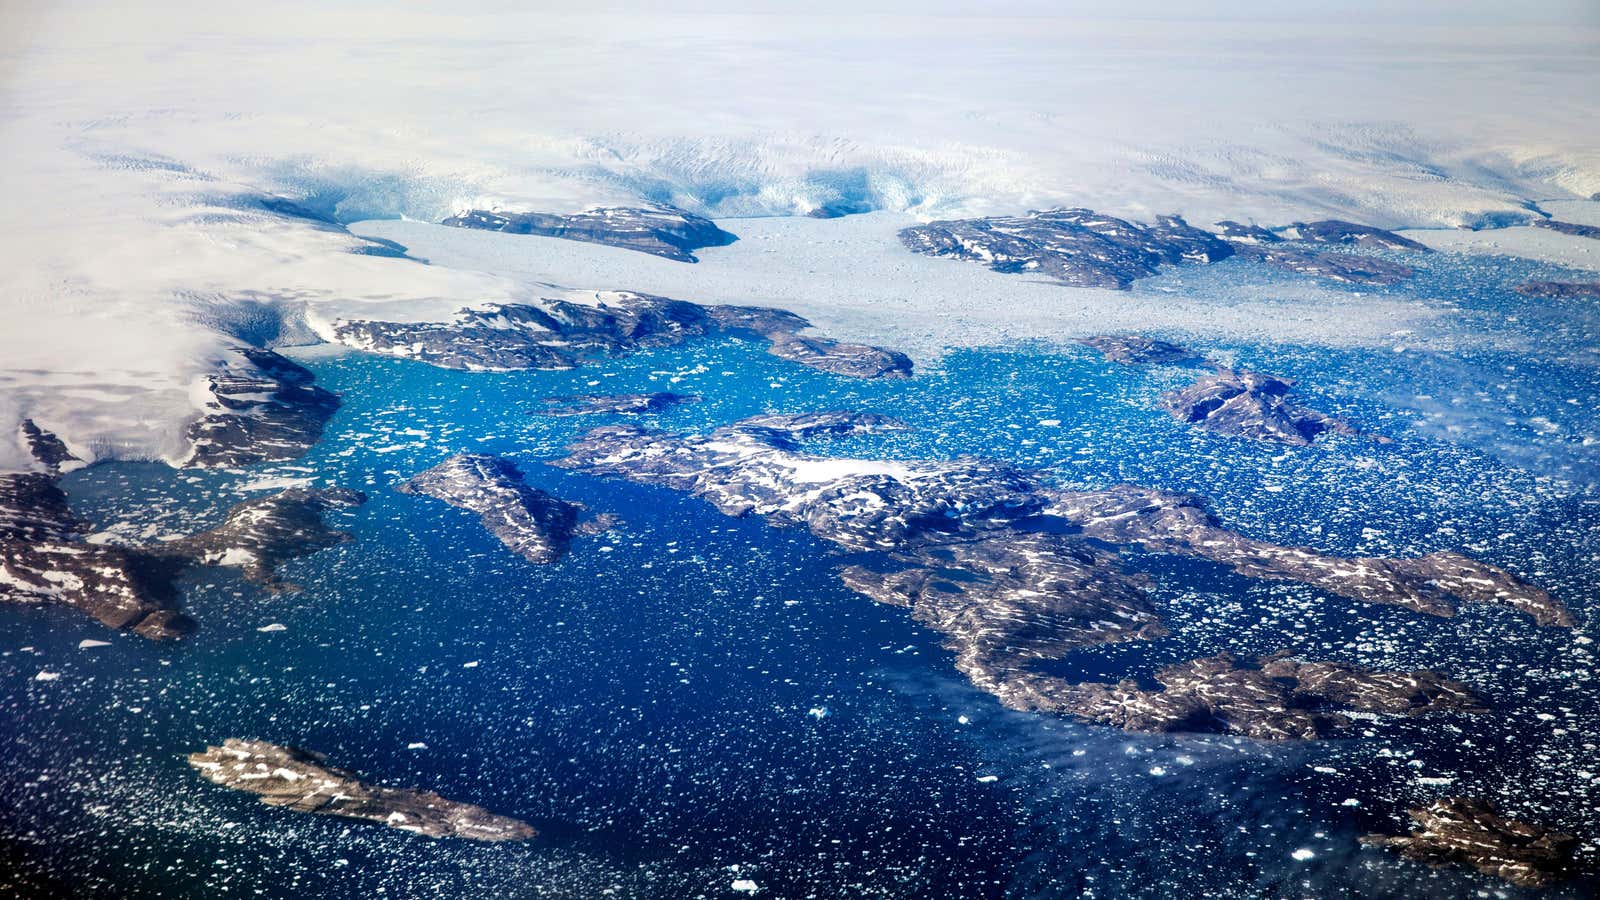 80% of mountain glaciers in Alberta, B.C. and Yukon will disappear